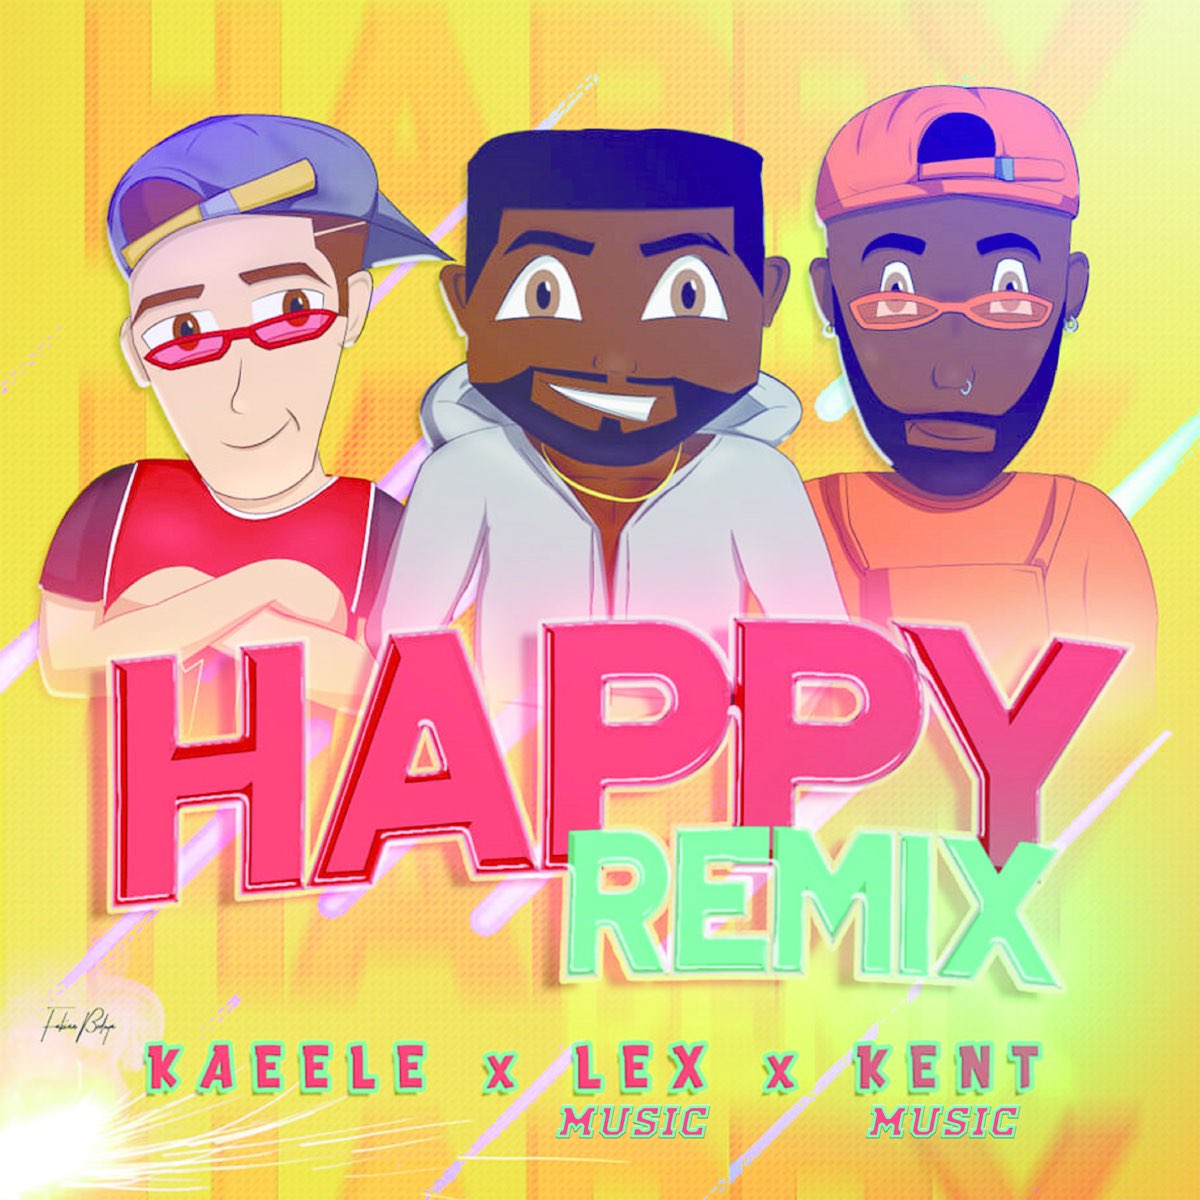 Be happy remix. Kaeele. TJ stay Happy Remix.